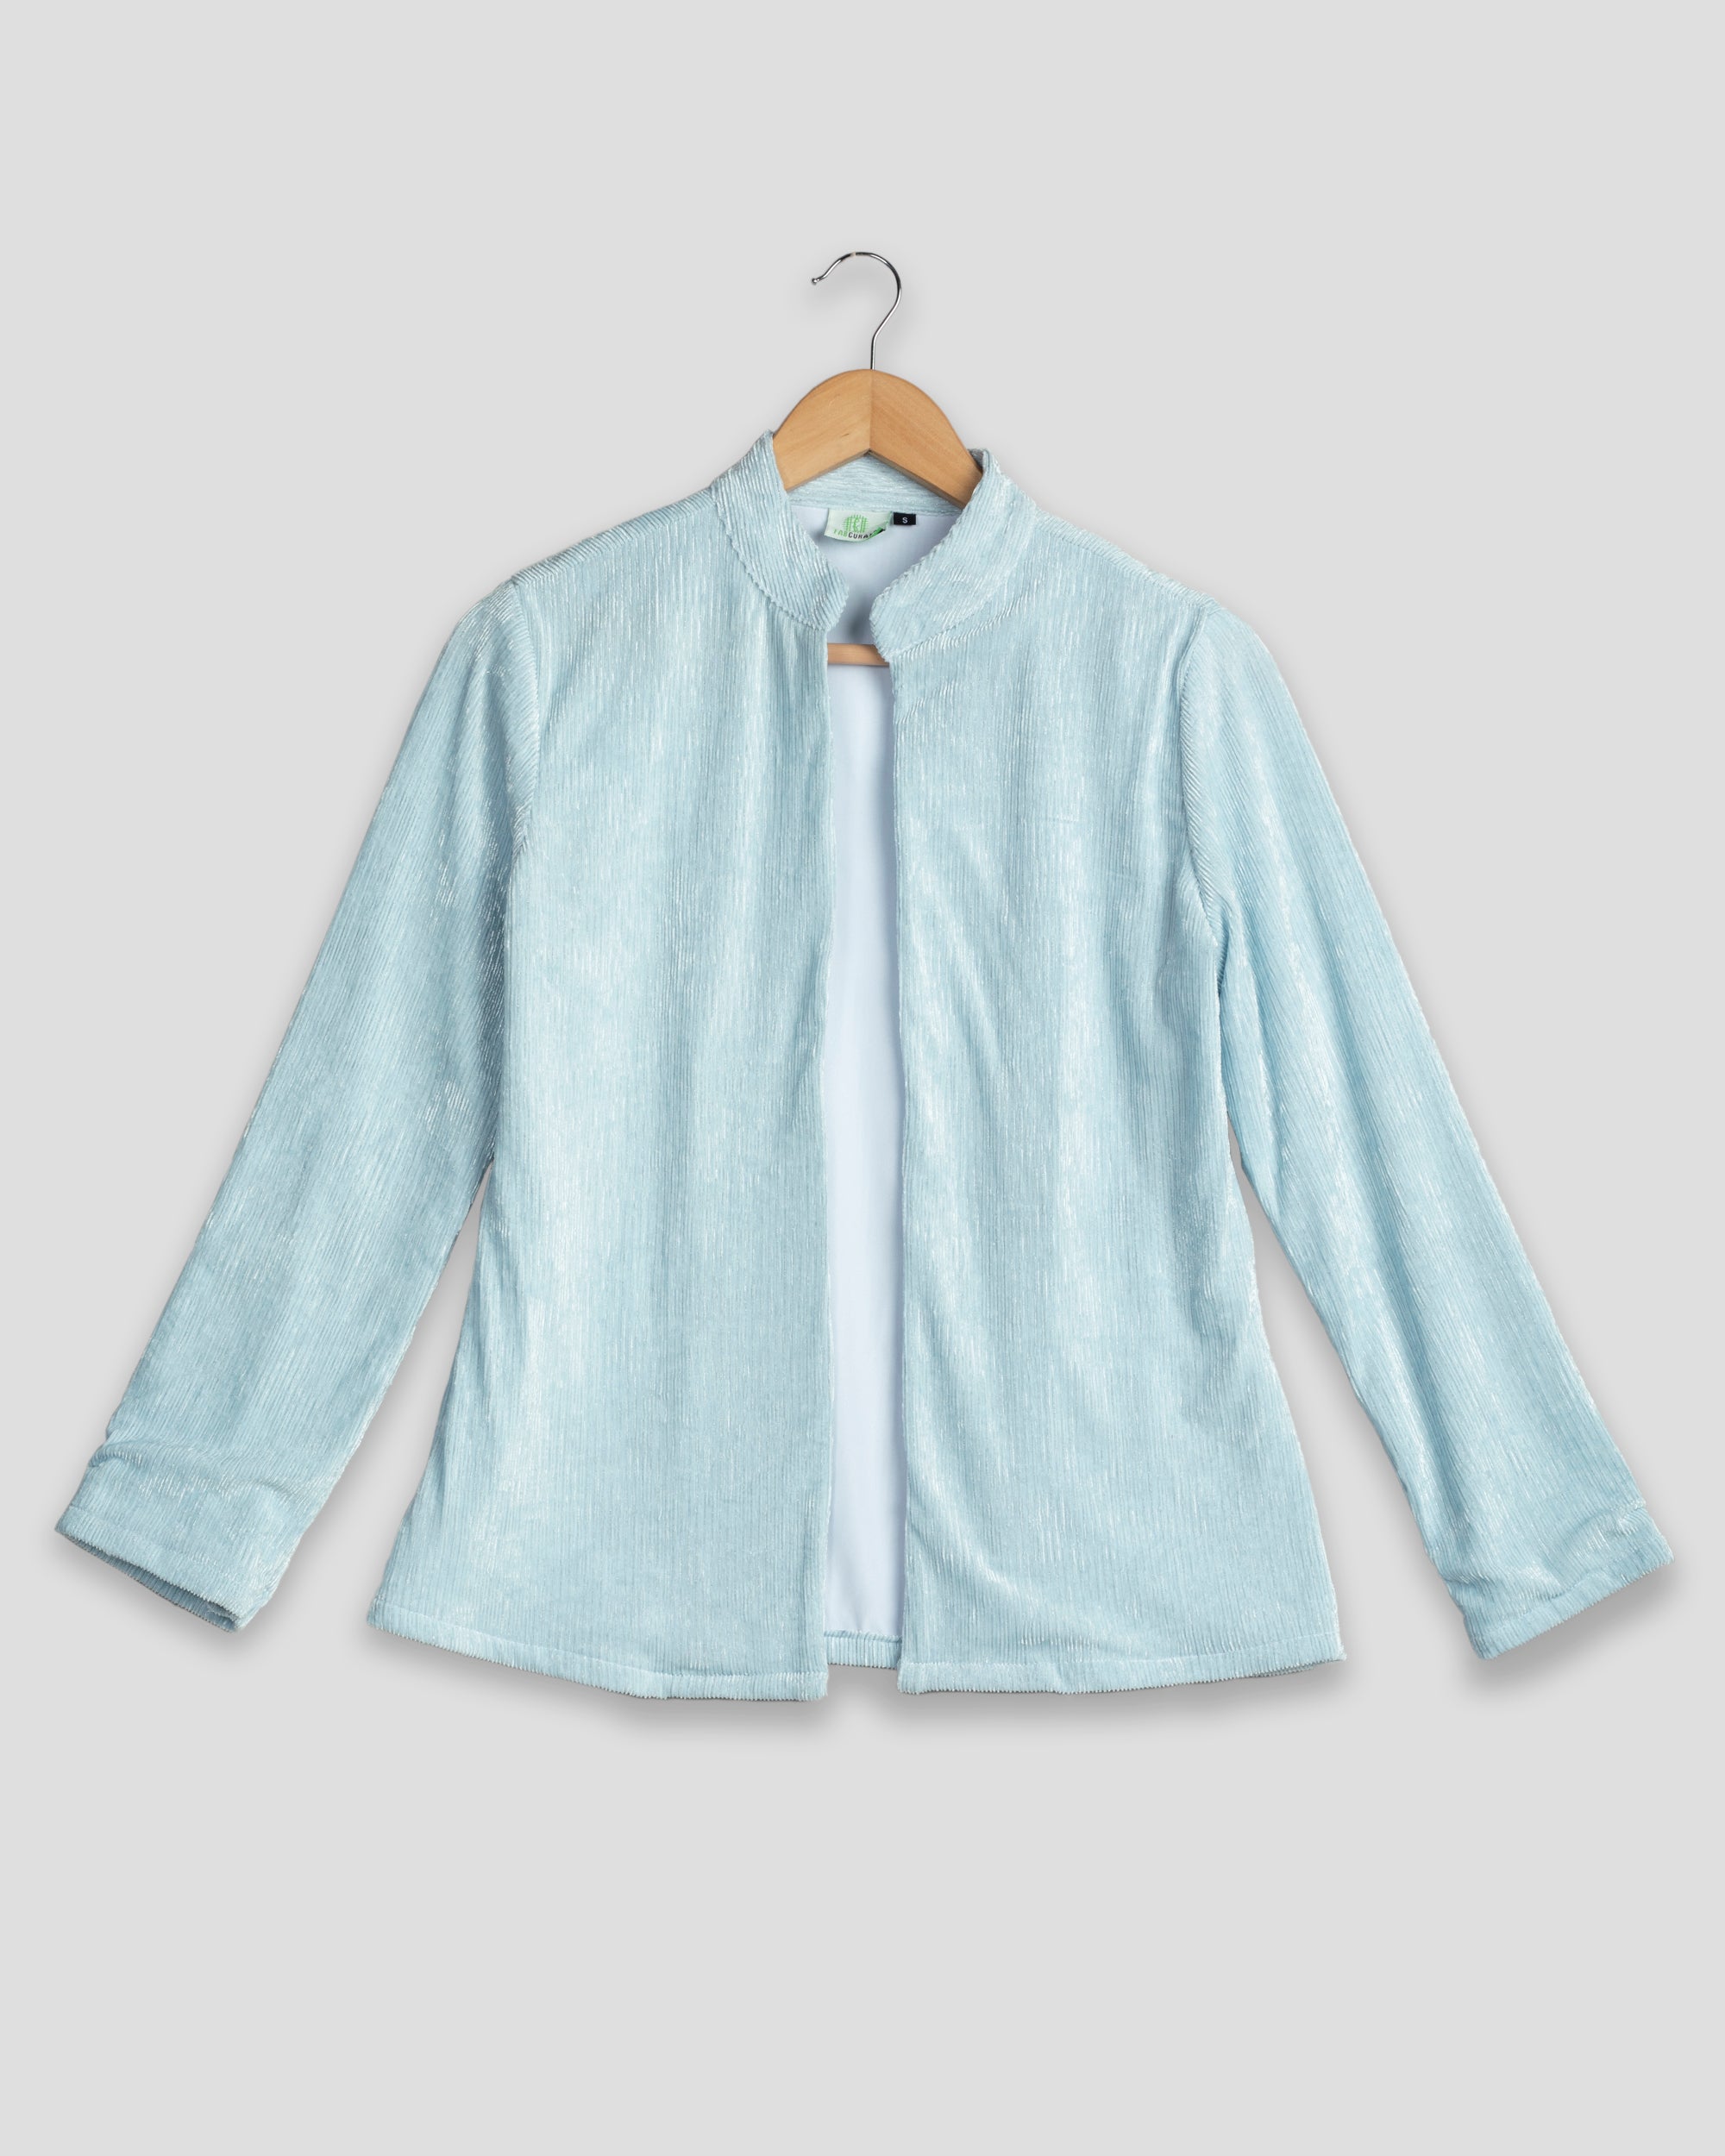 Notched Ladies Slim Fit Formal Blazer Plus Sizes - Navy Blue / M | Suit nữ,  Phụ nữ, Jacket nữ